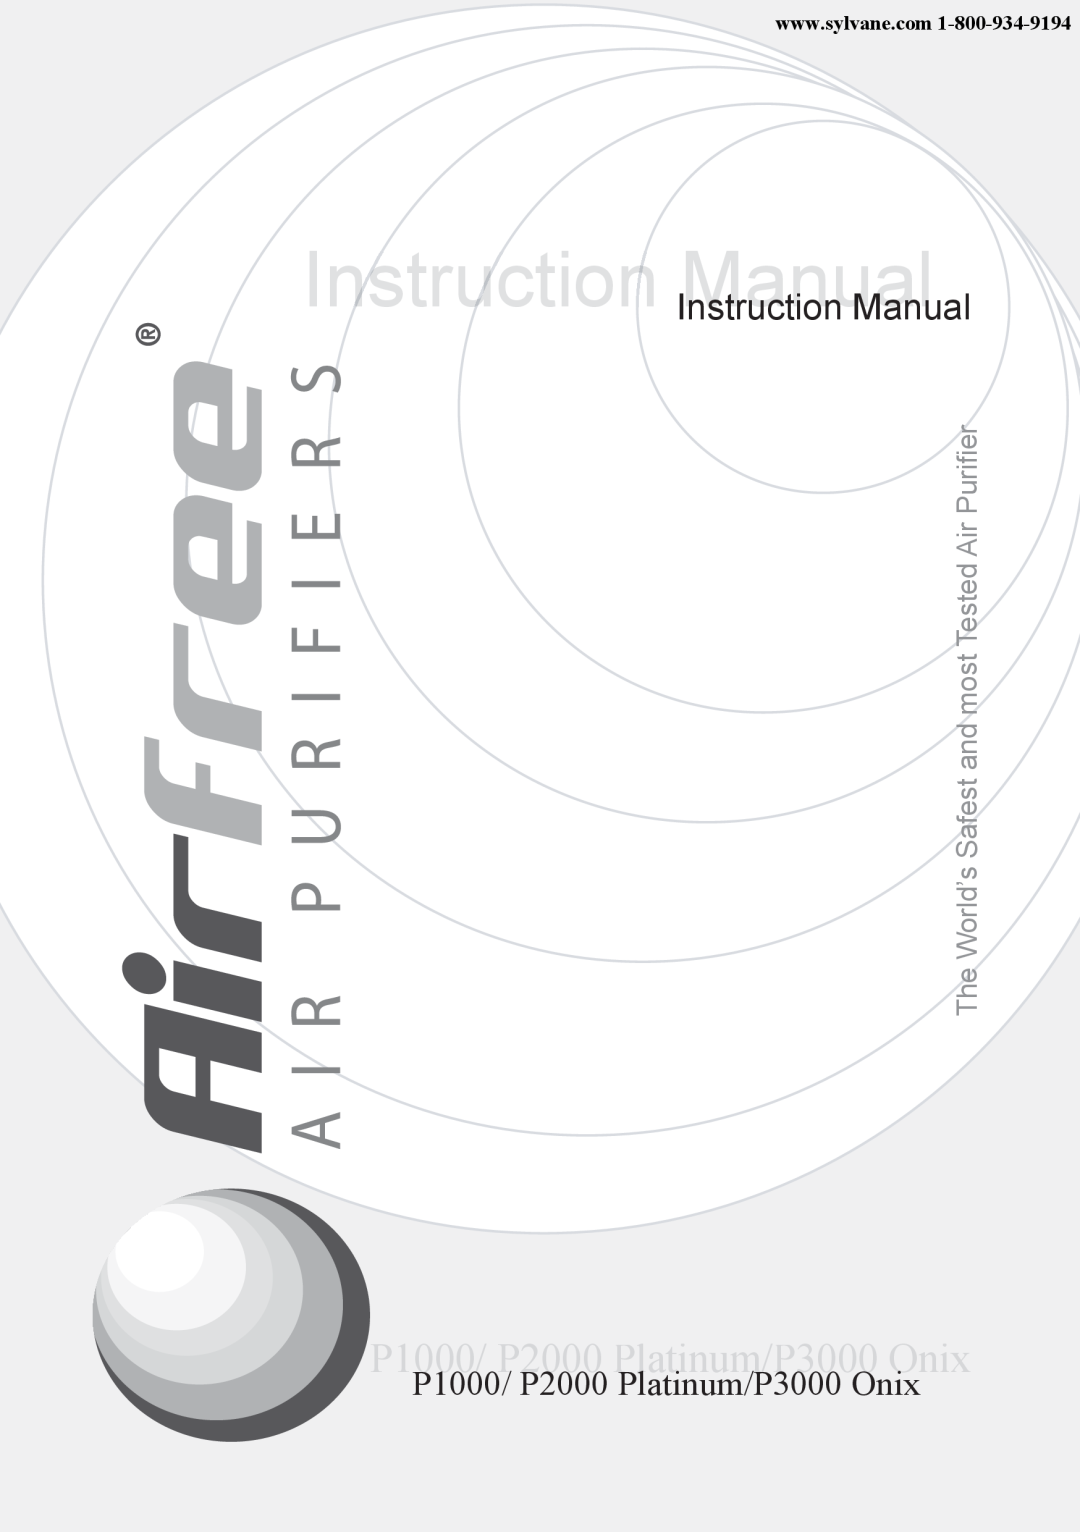 Airfree Onix 3000 instruction manual Instruuction Manual, P1000/ P2000 Platinum/P3000 Onix 